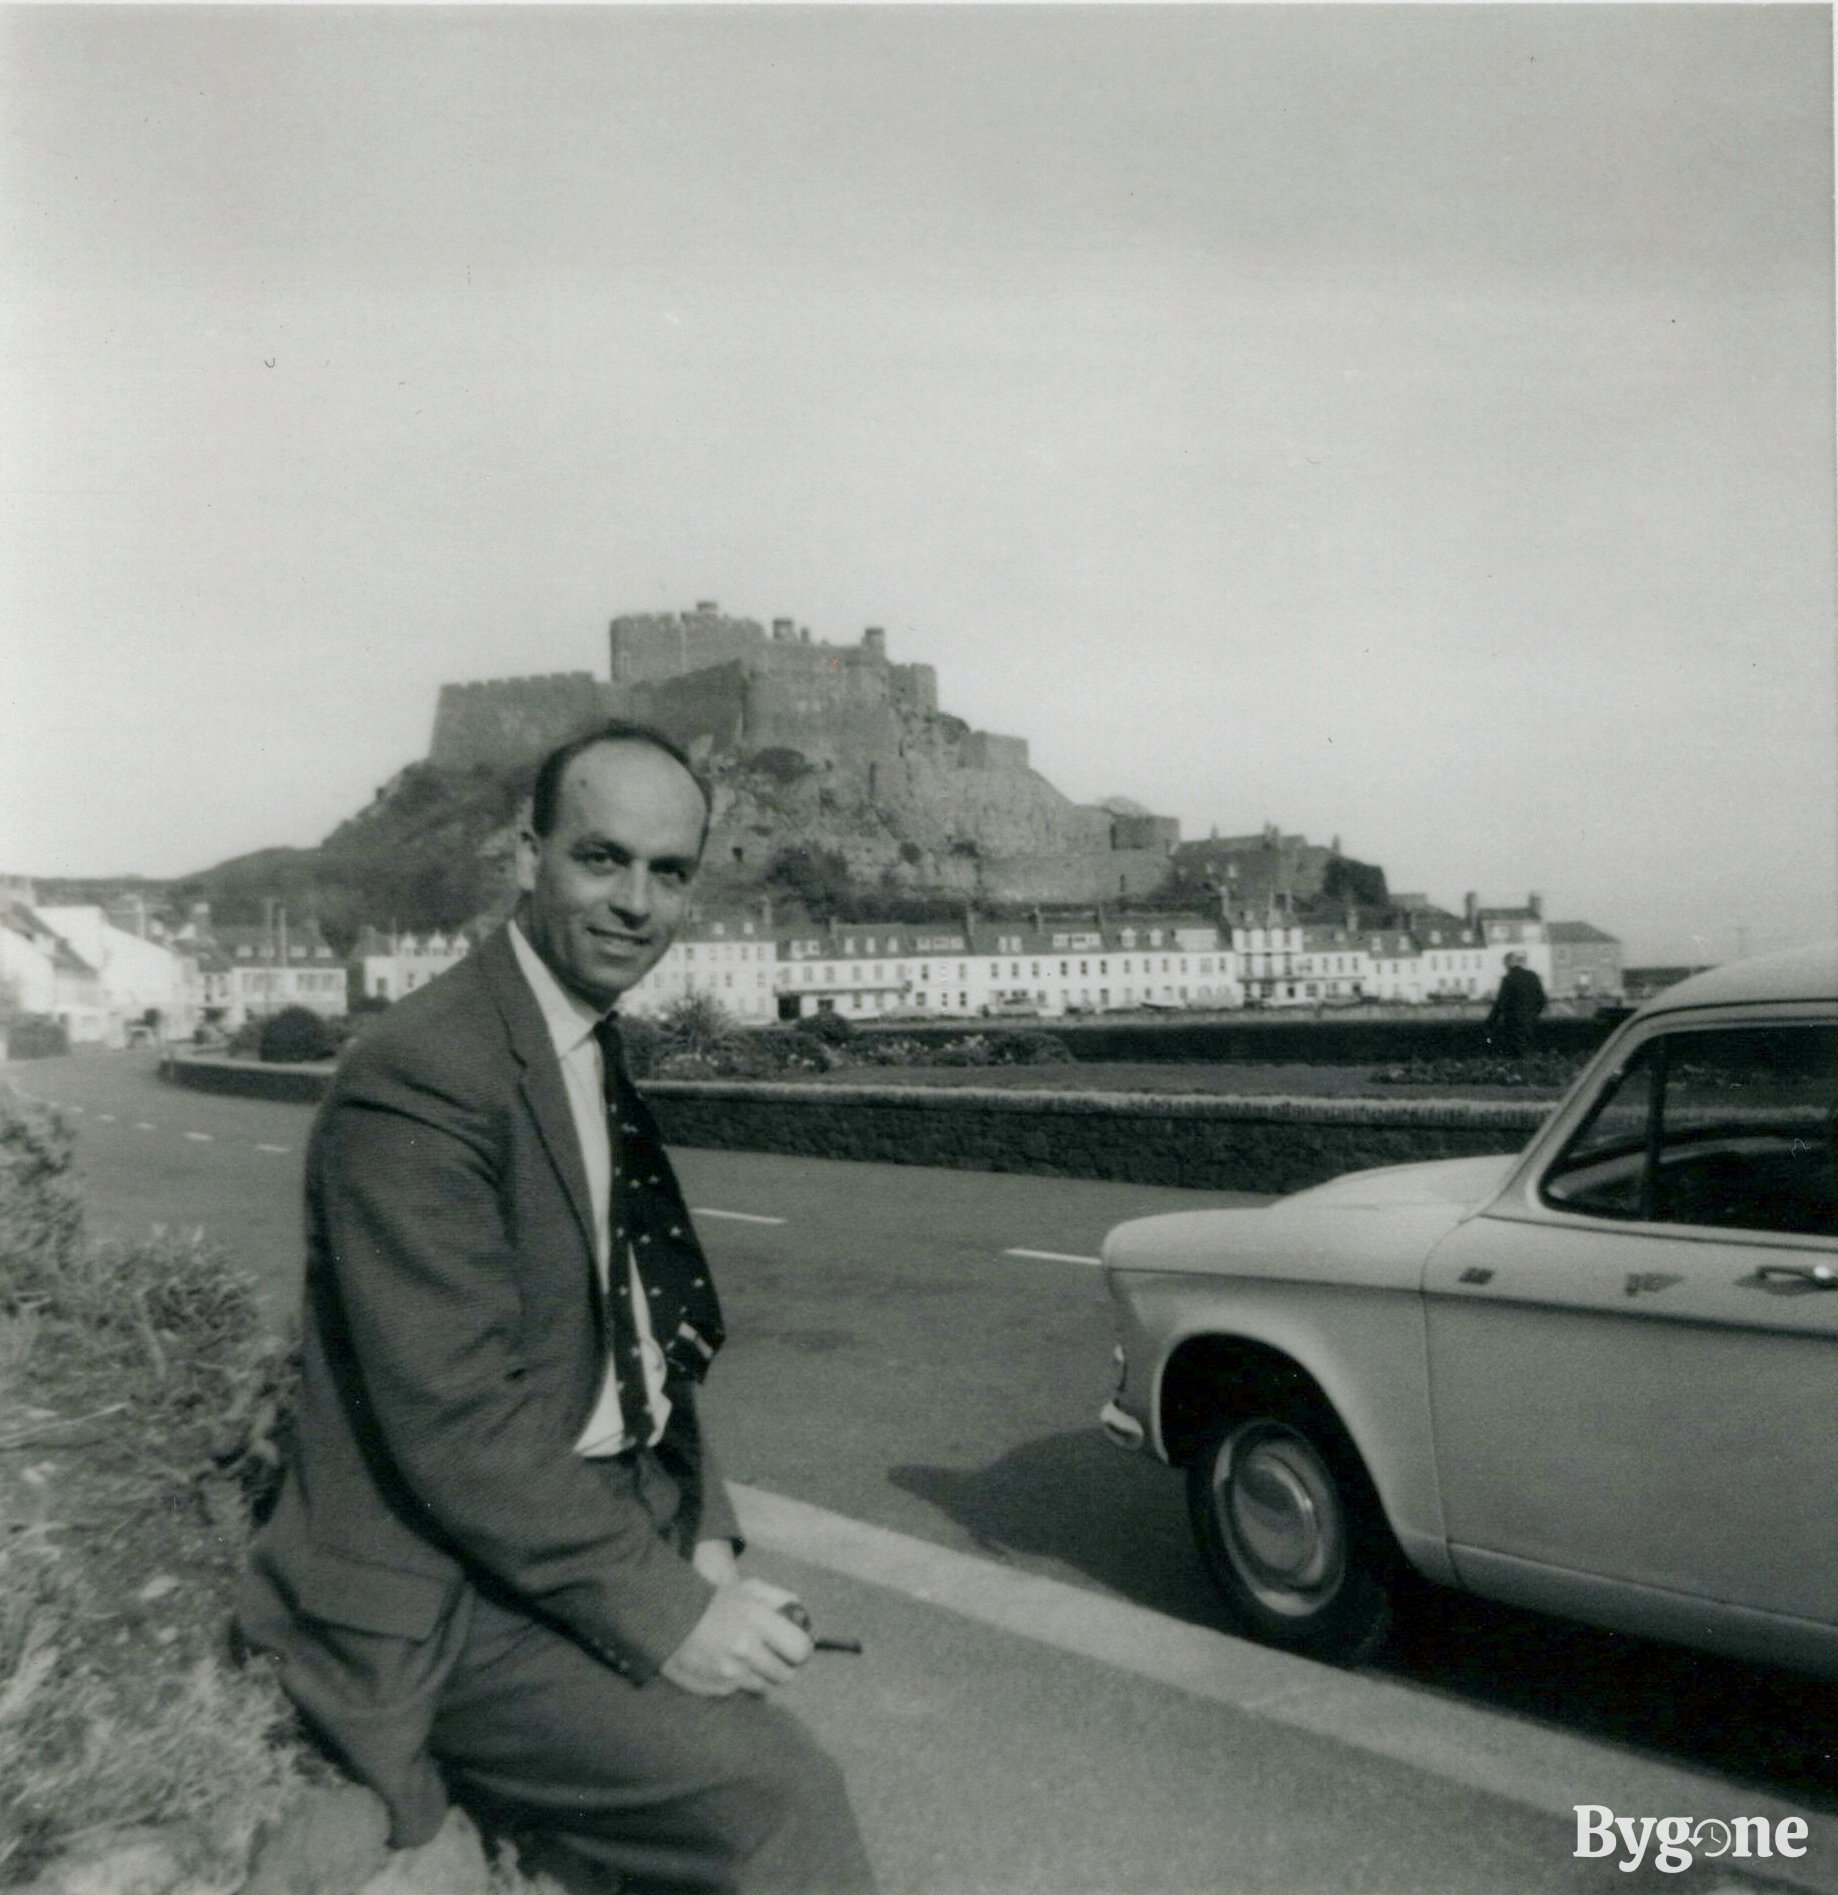 Gorey Road, showing Gorey and Mont Orgueil, 1960s